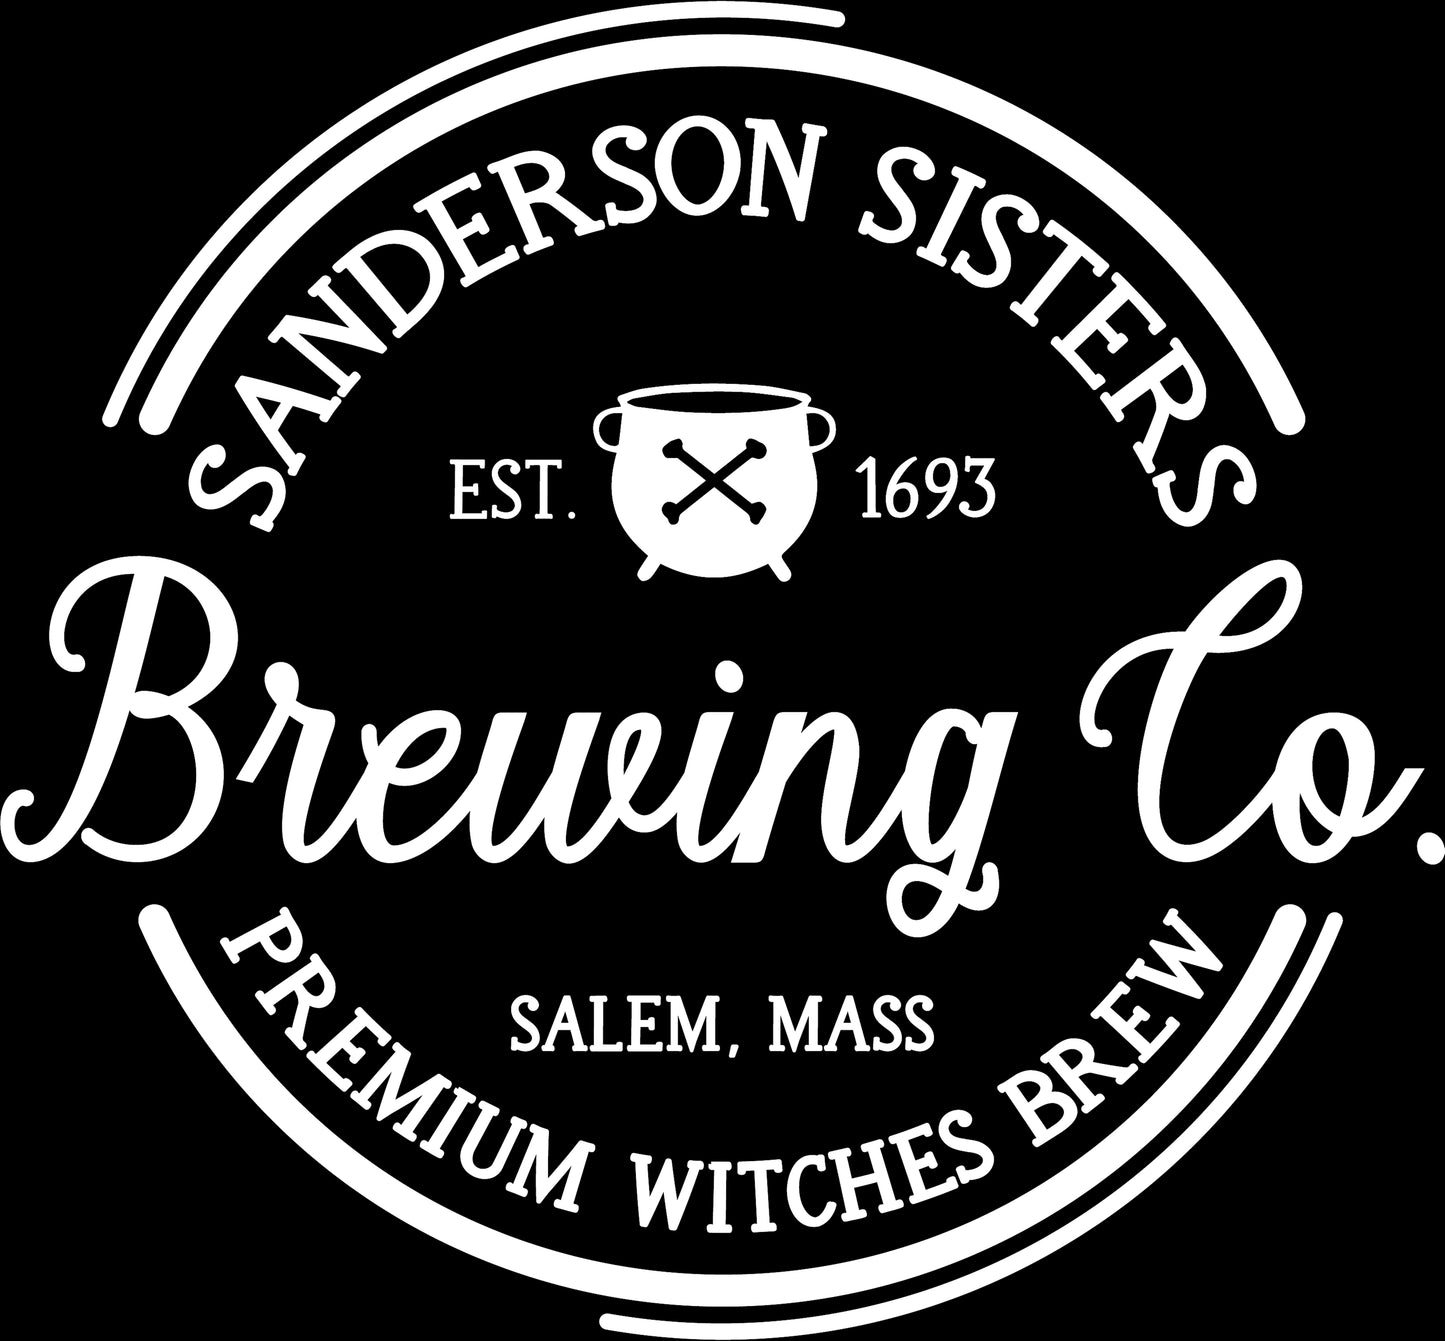 Sanderson Sisters Brewing Co.